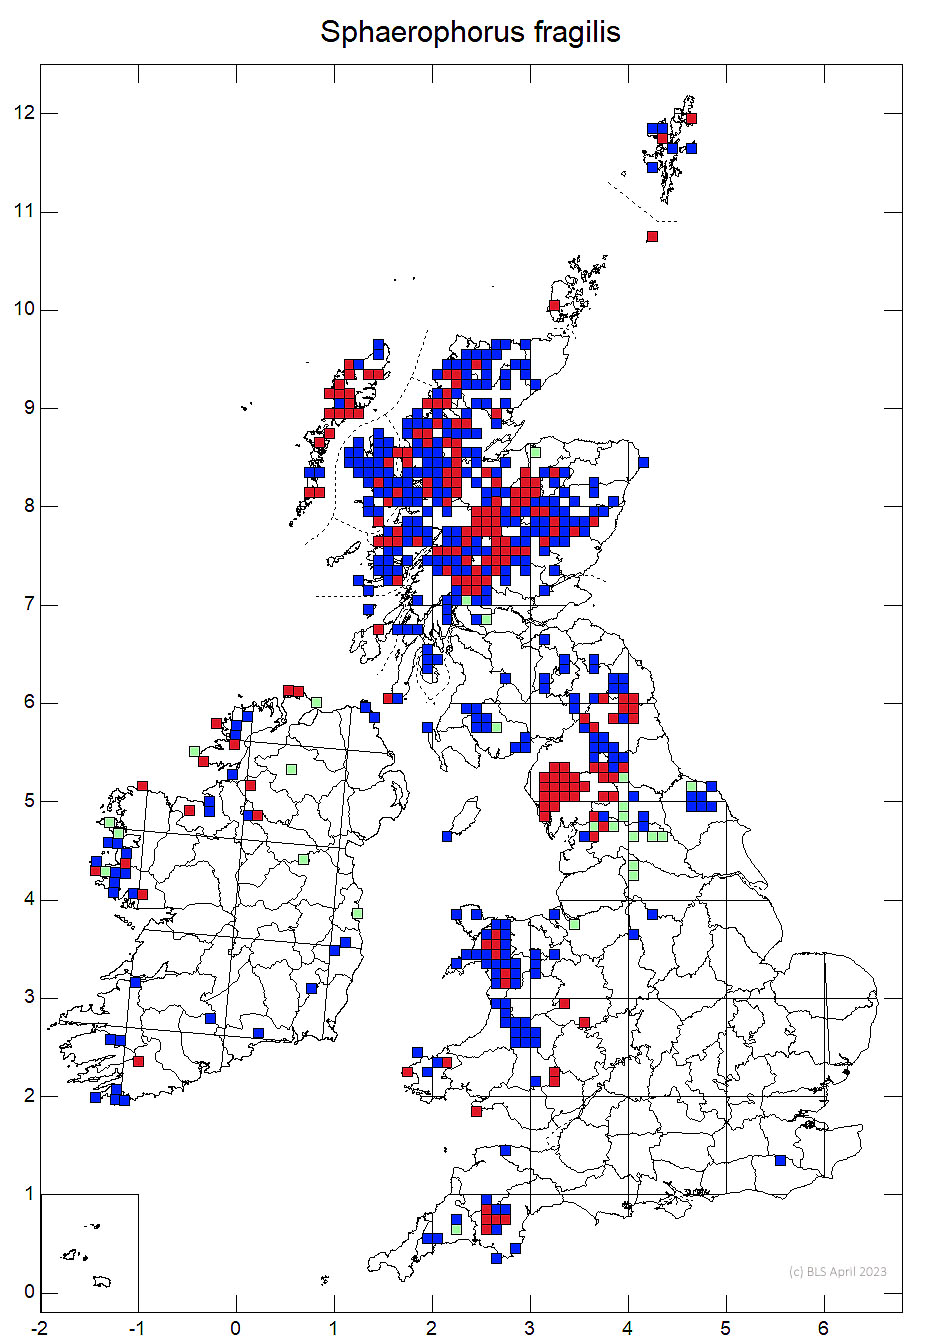 Sphaerophorus fragilis 10km sq distribution map